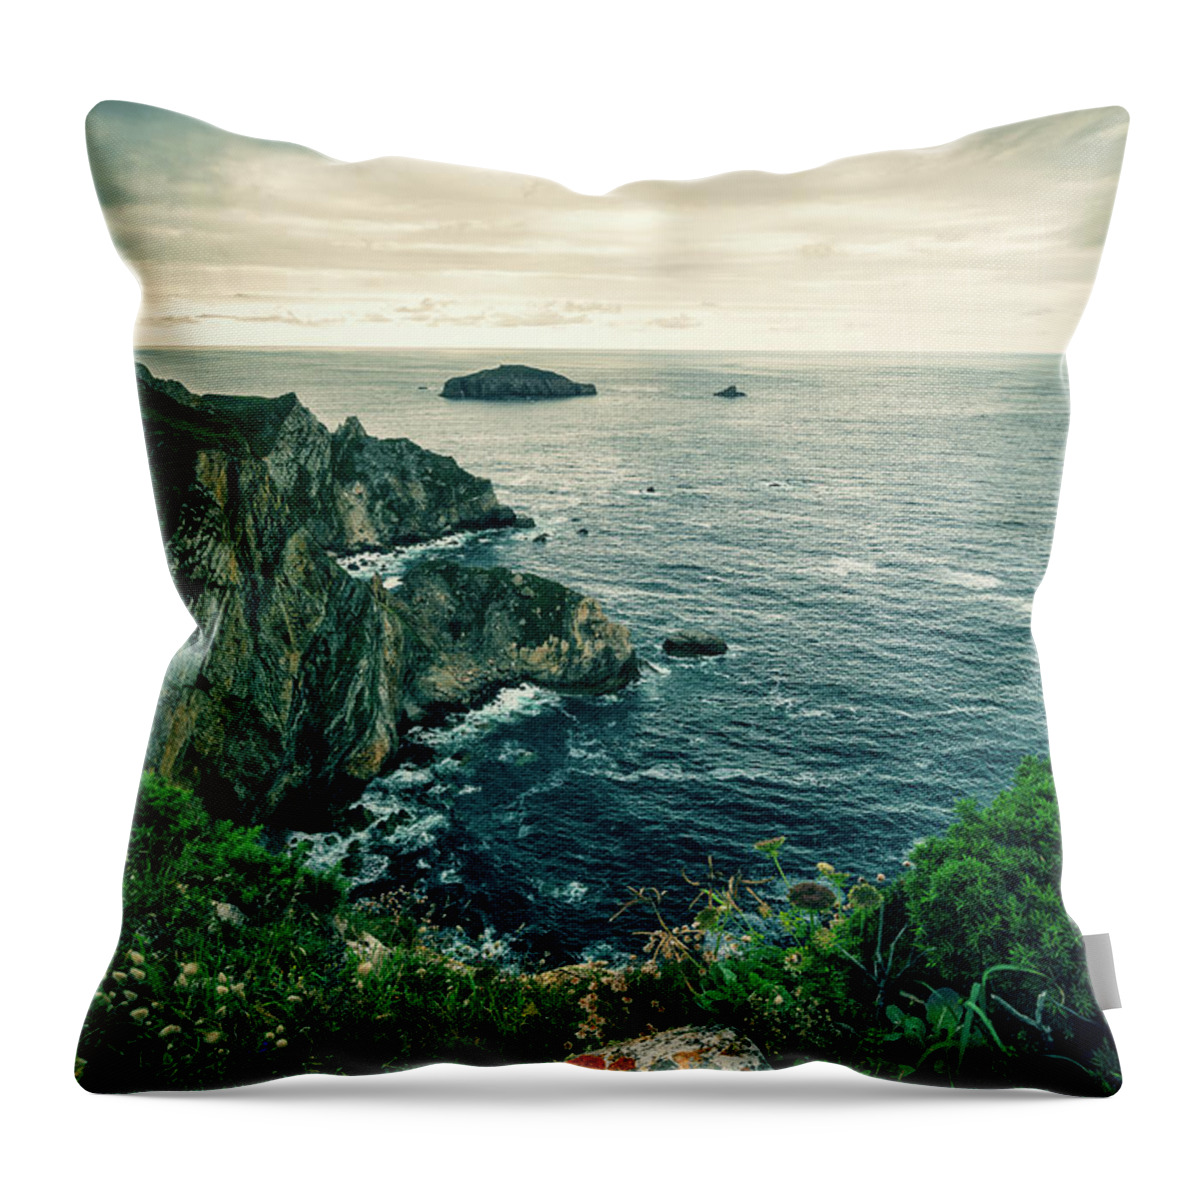 Asturian Coast Throw Pillow featuring the photograph Dramatic Asturian Coast by Benoit Bruchez